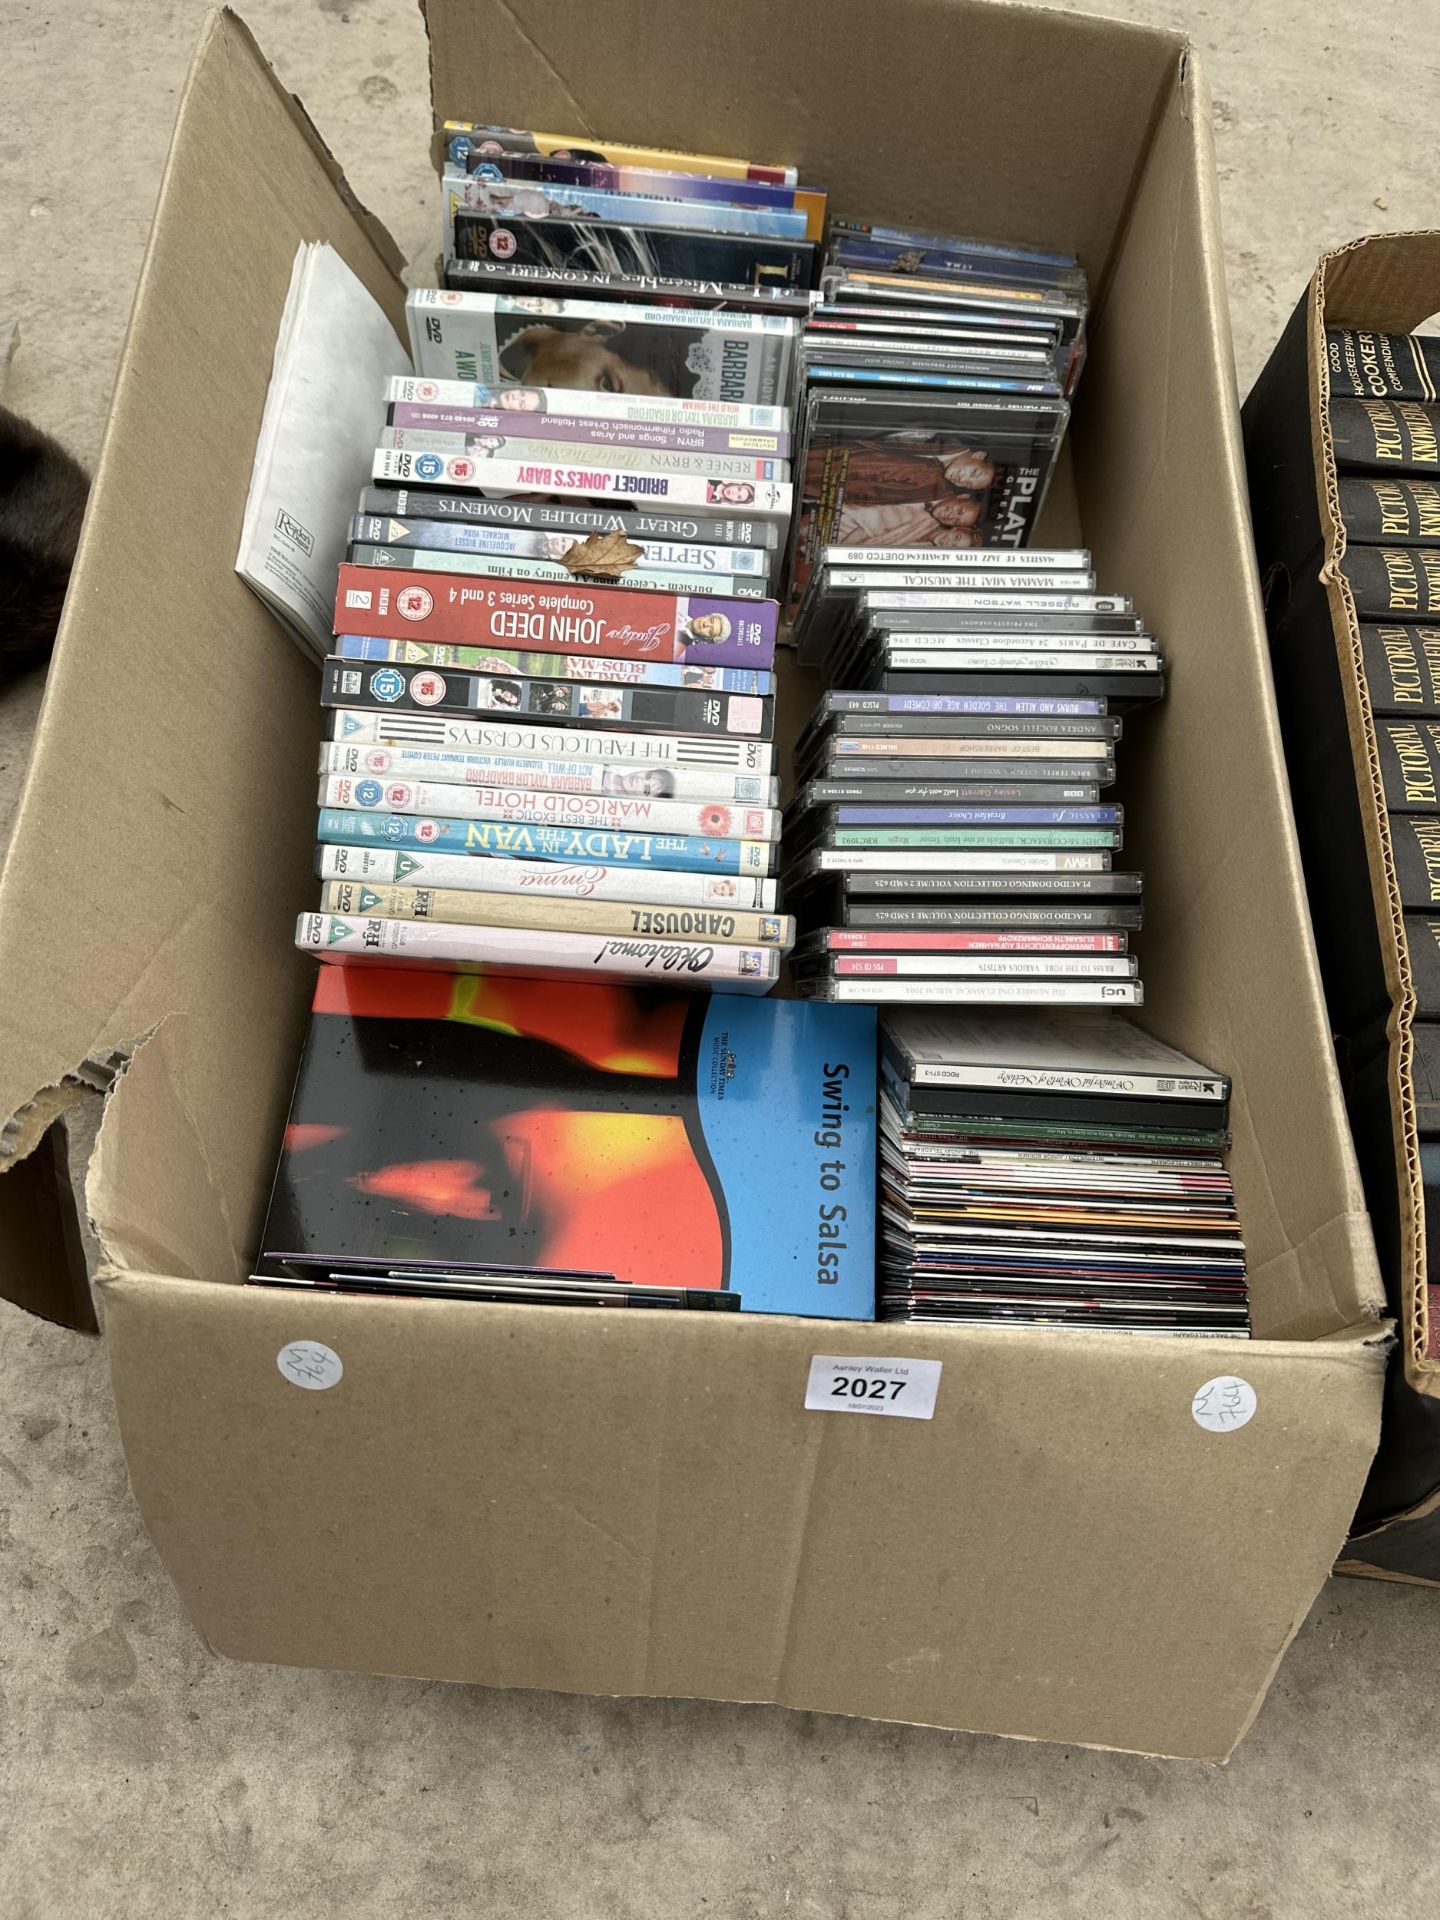 AN ASSORTMENT OF CDS AND DVDS